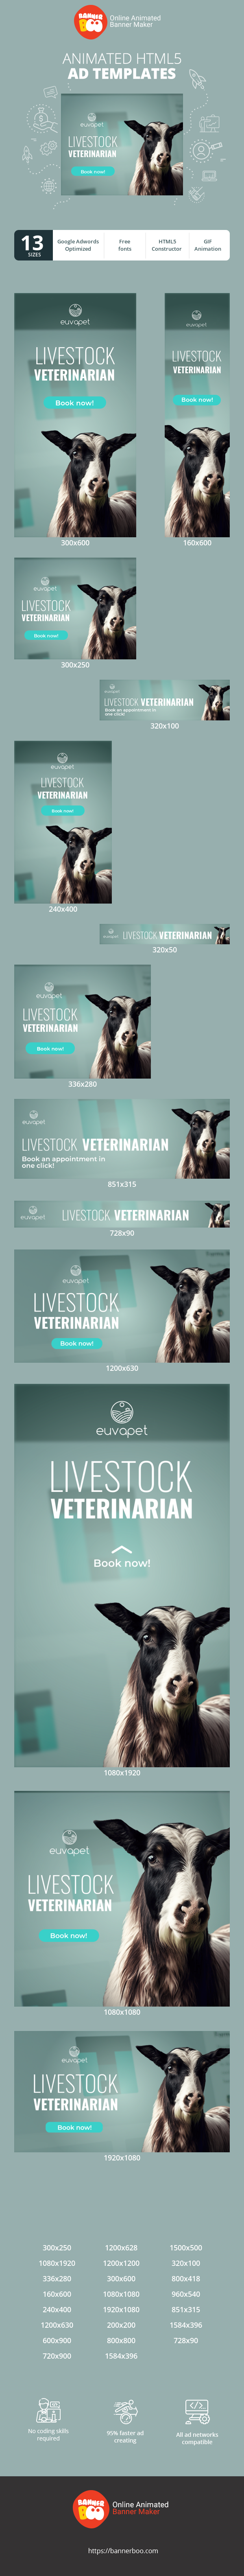 Шаблон рекламного банера — Livestock Veterinarian — Book An Appointment In One Click!